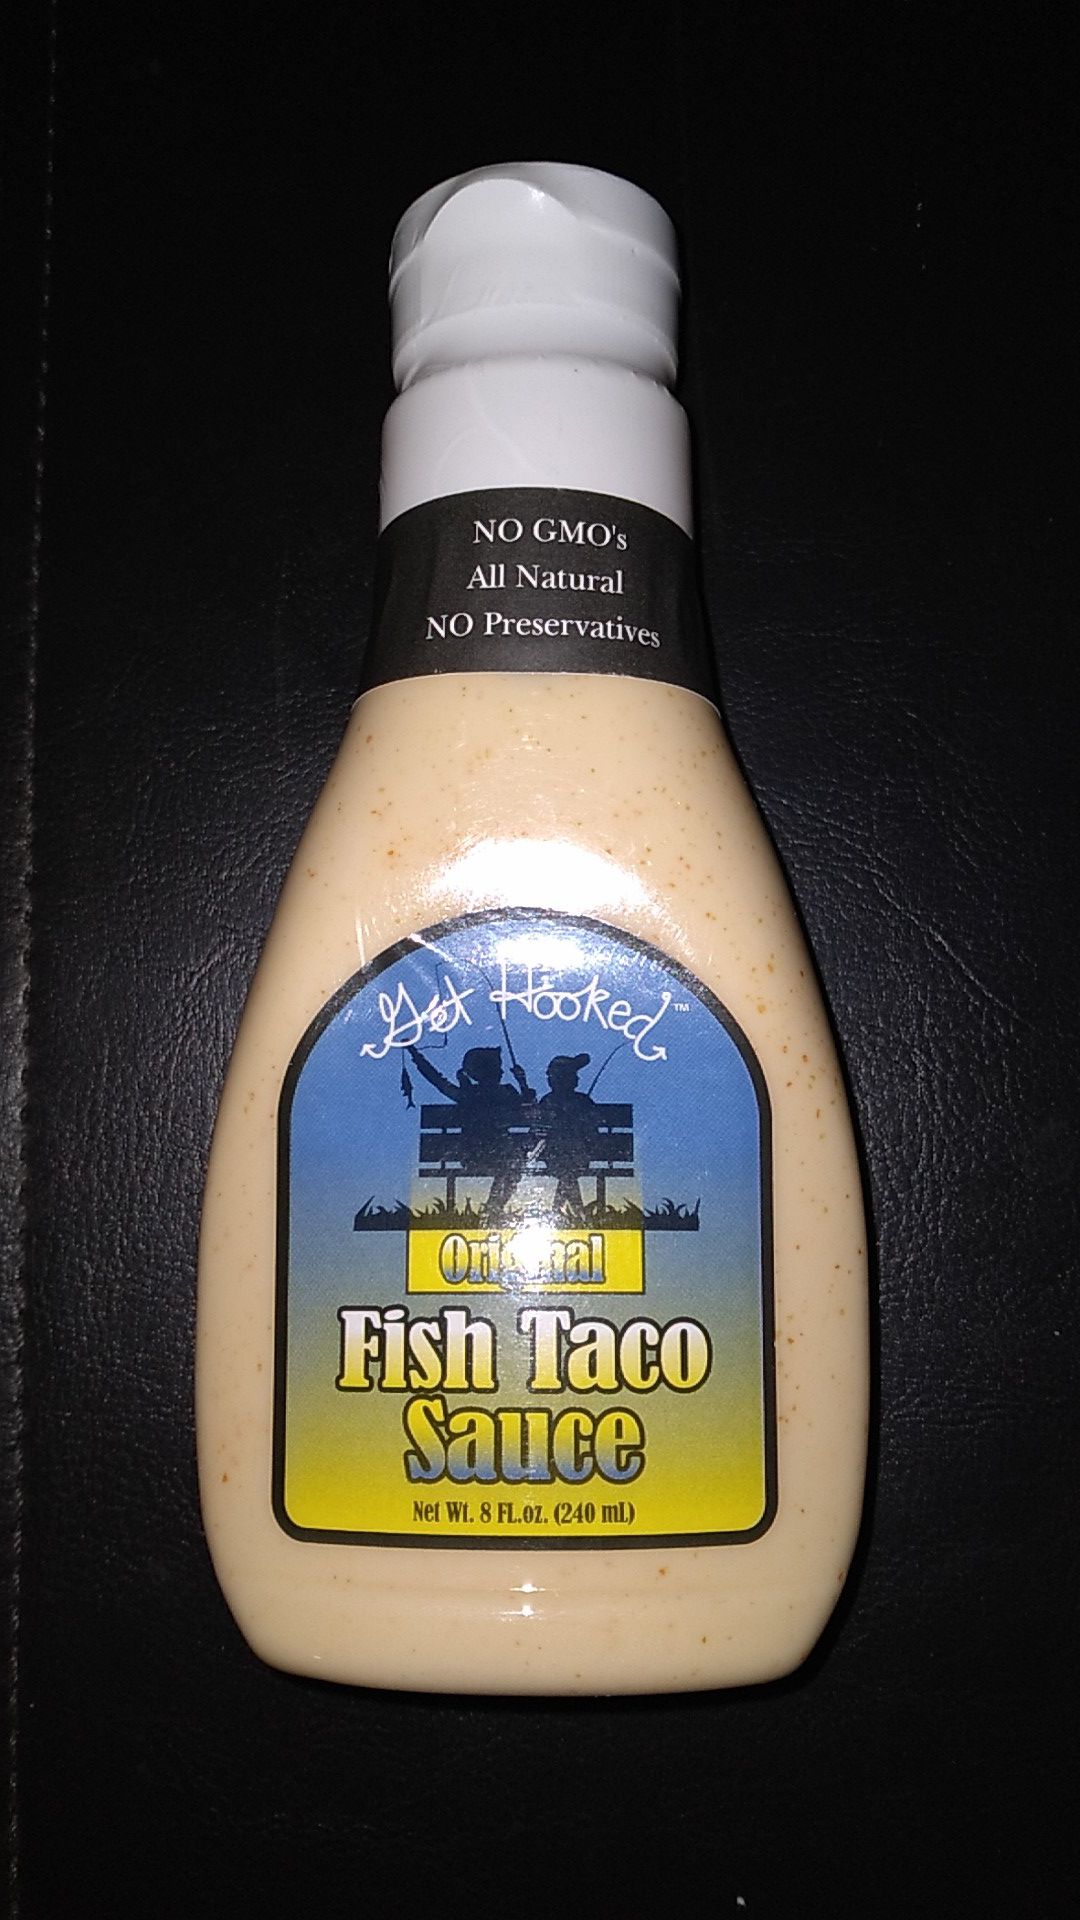 Original fish taco sauce 1-8 Oz container expiration March 26th 2021 locally-made Temecula California $1